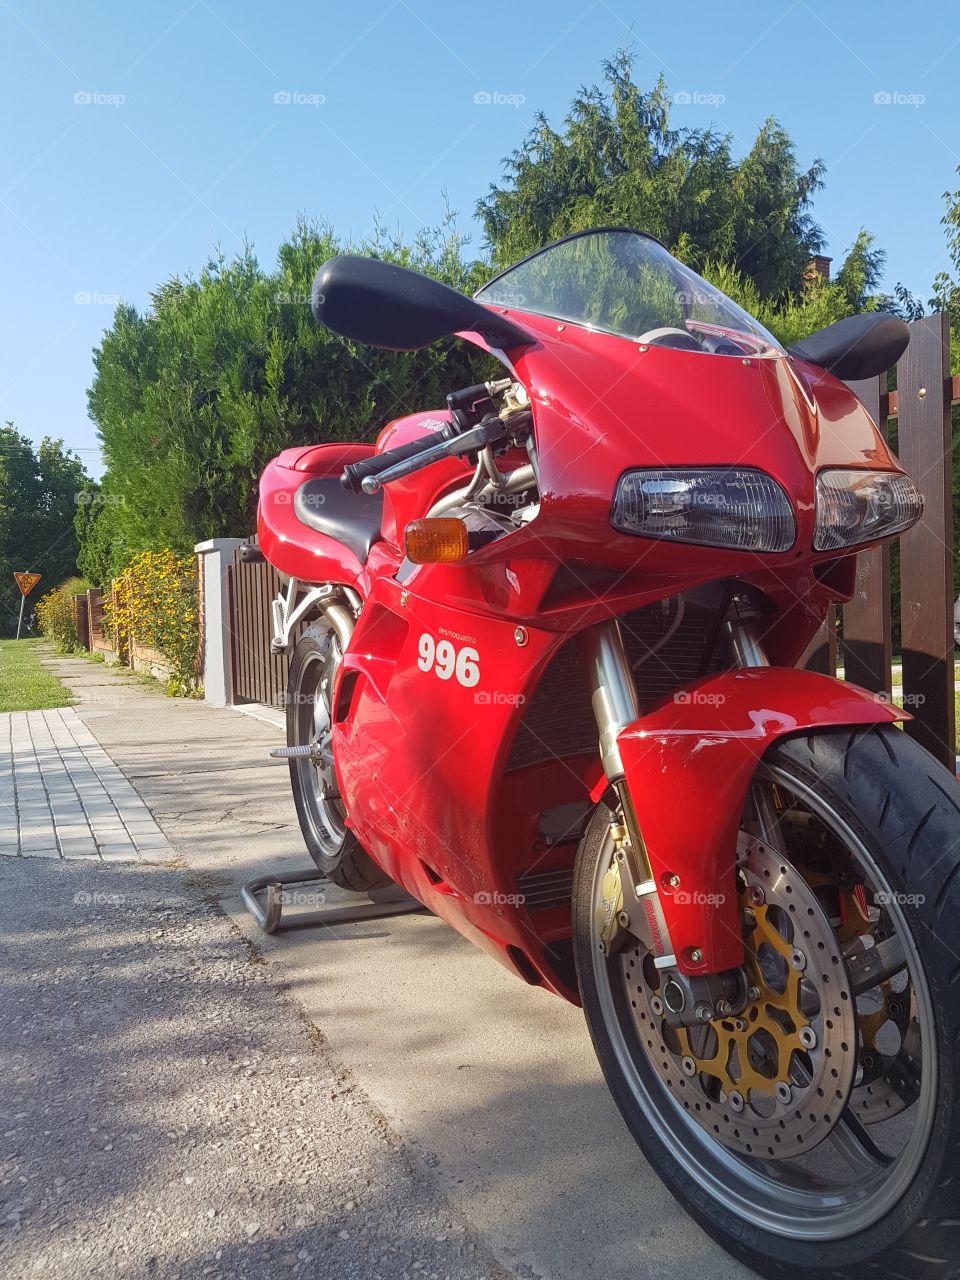 ducati sport motorcycle